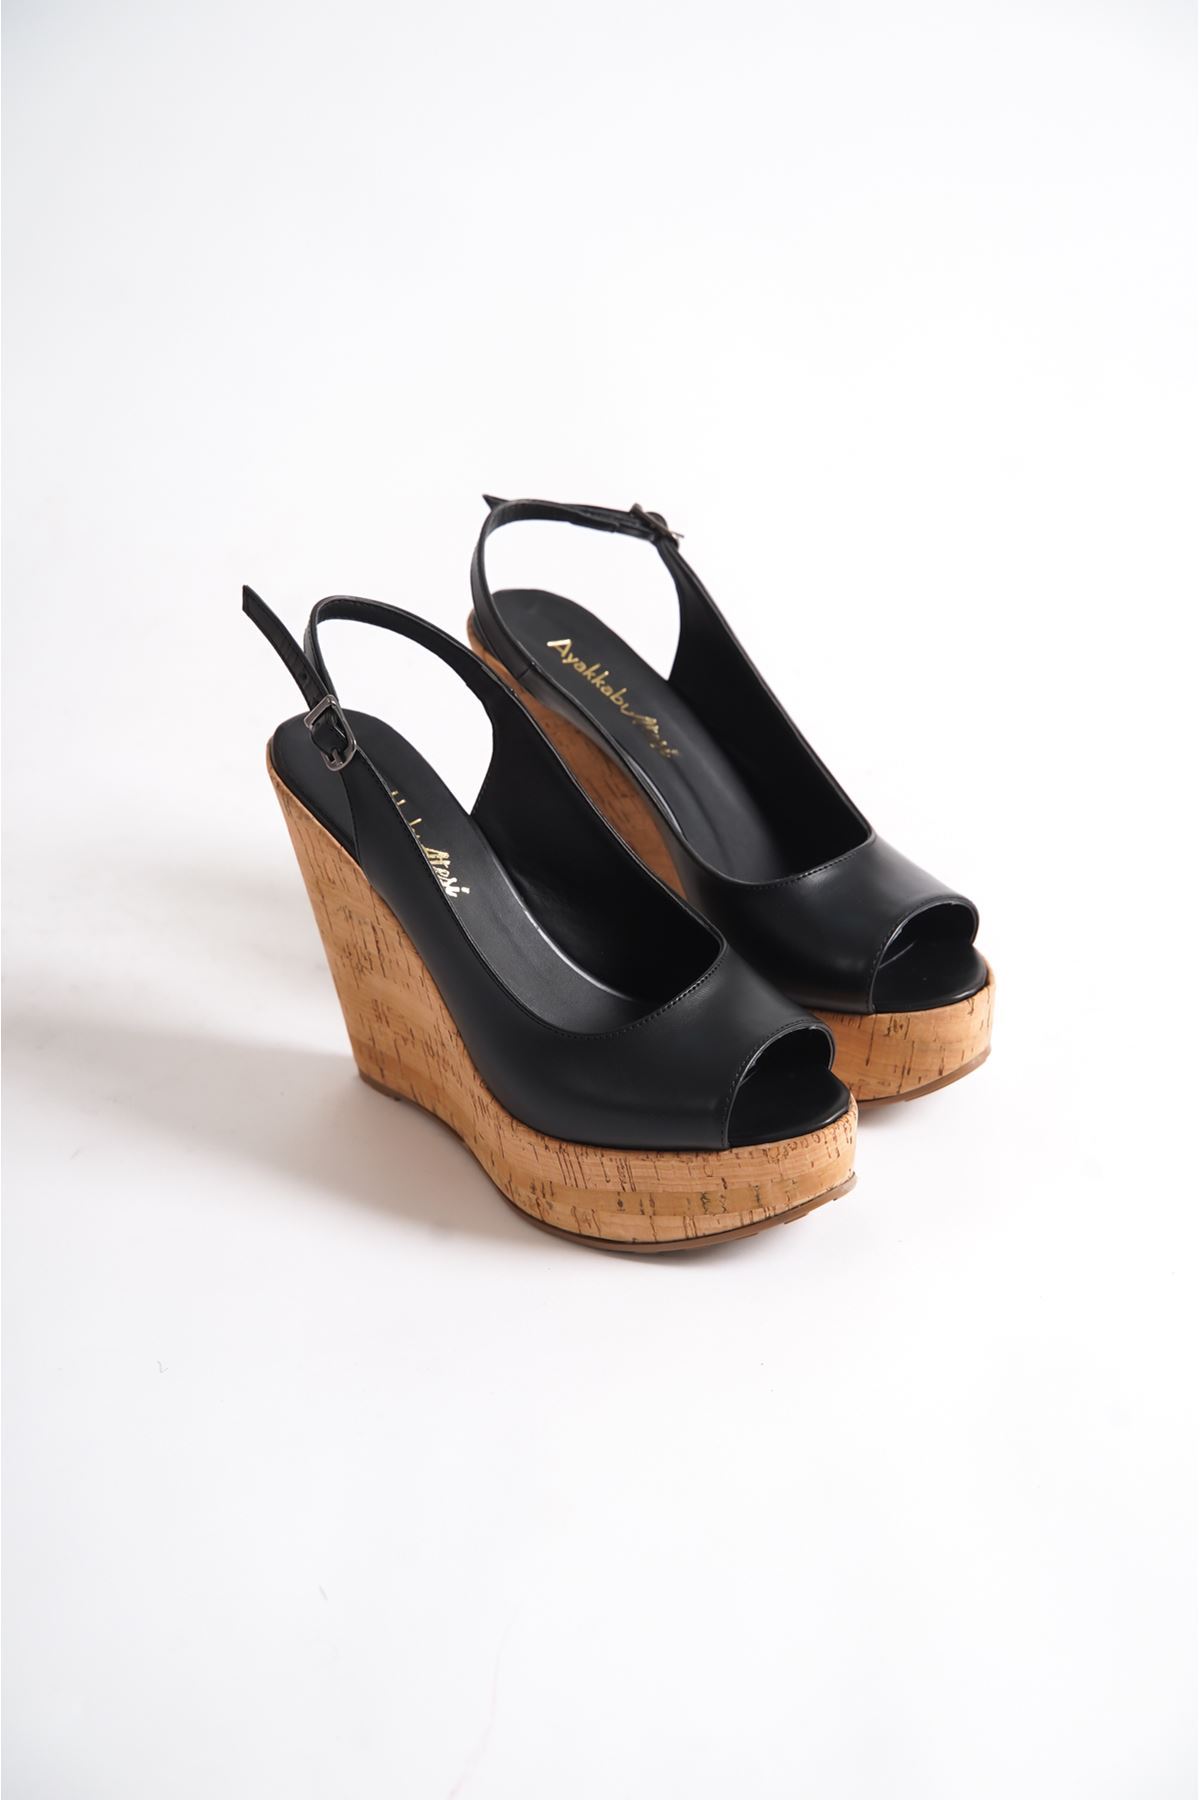 Mantara Siyah Cilt  Dolgu Topuklu Kadın Ayakkabı Kayla